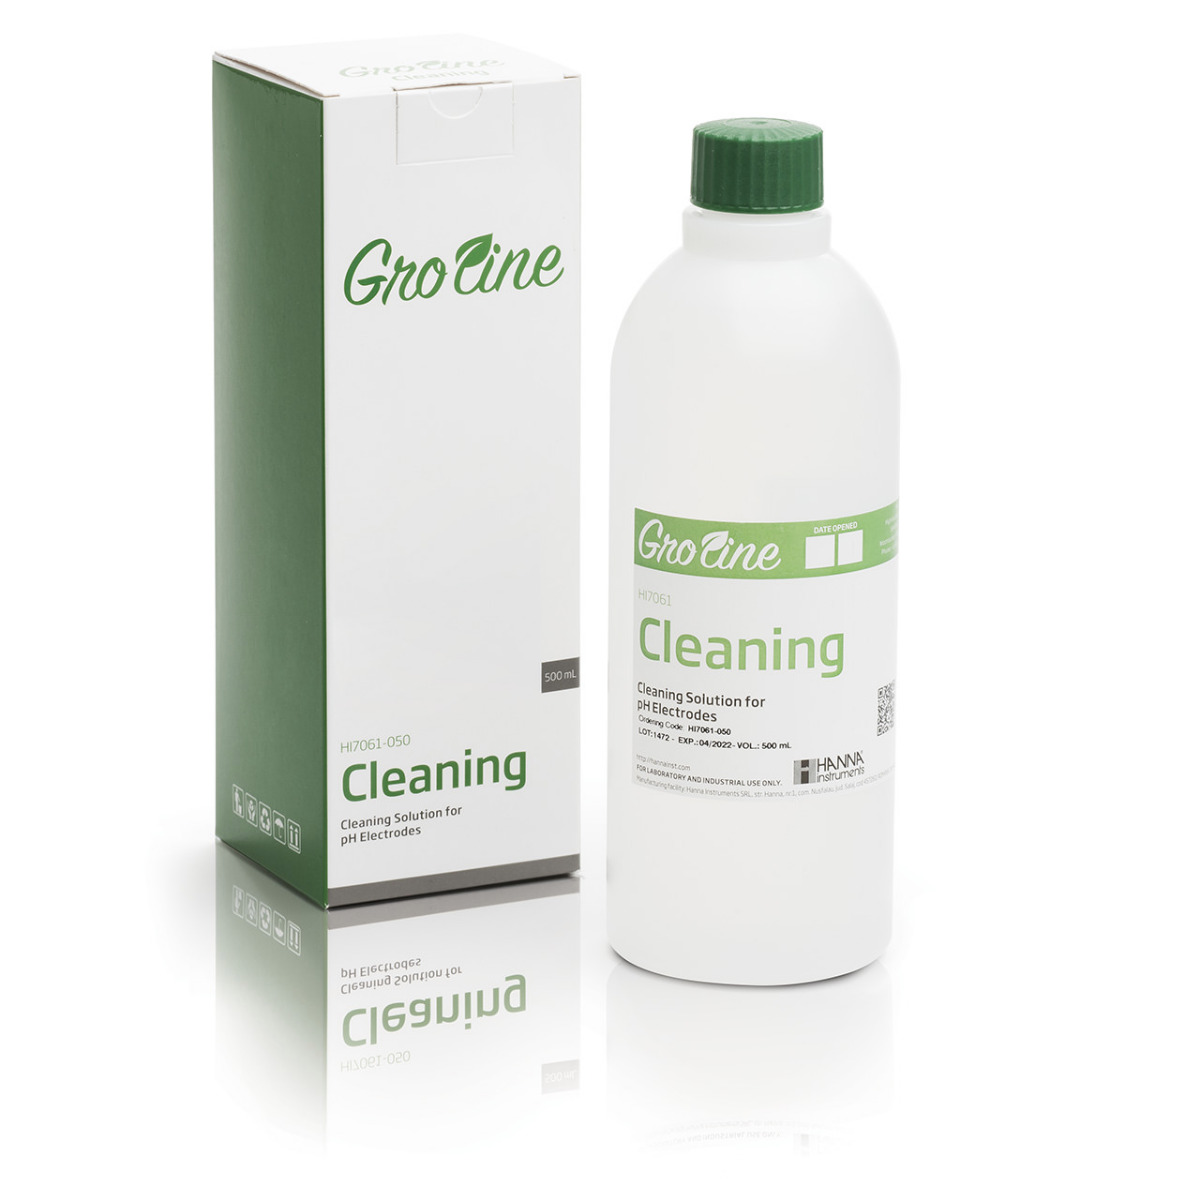 HI7061-050 GroLine General Purpose Cleaning Solution (500 mL)